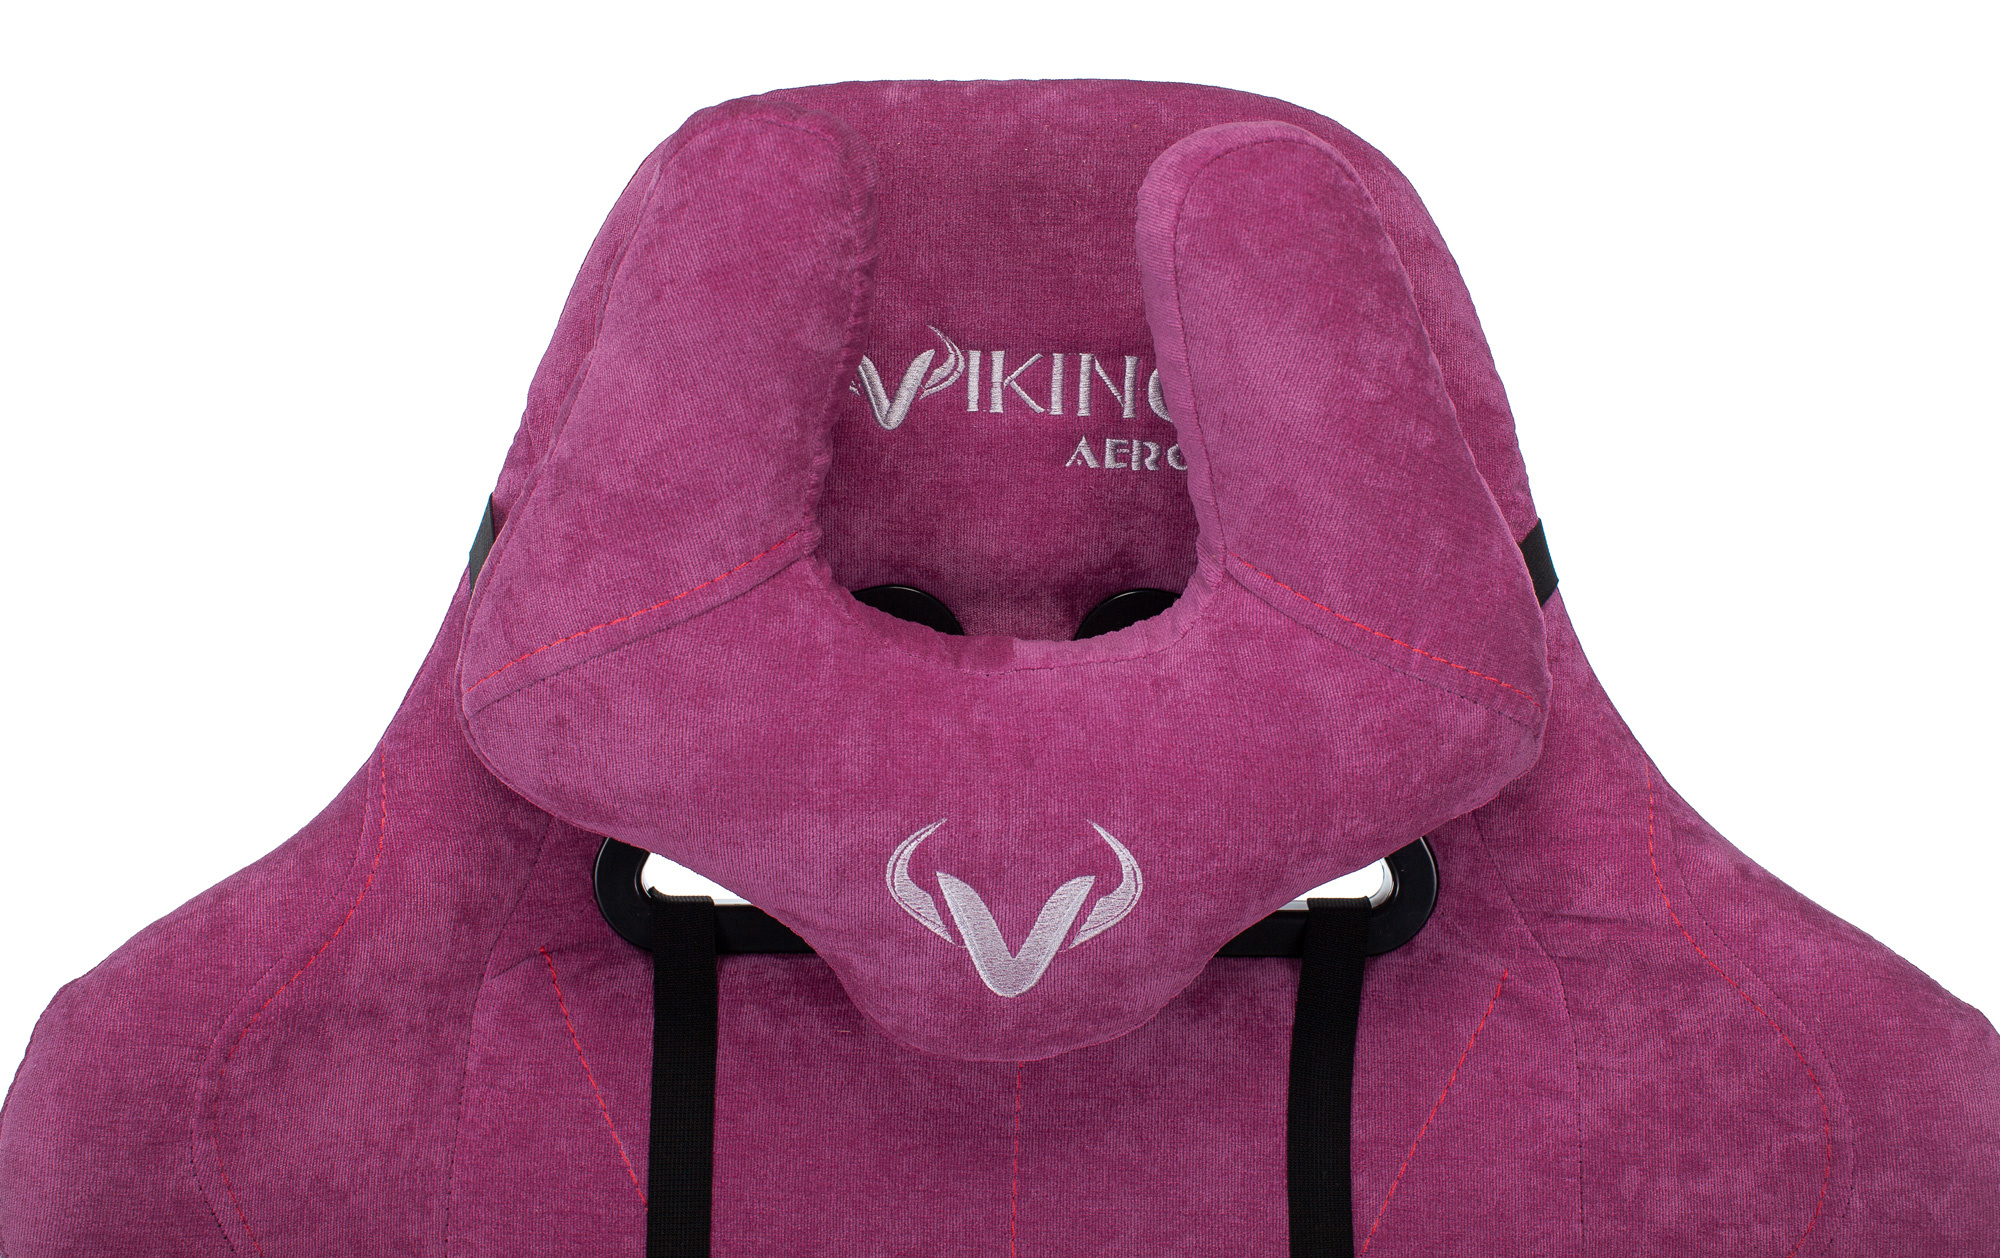 Кресло игровое Zombie VIKING KNIGHT, обивка: ткань, цвет: малиновый (VIKING KNIGHT LT15) от магазина Buro.store